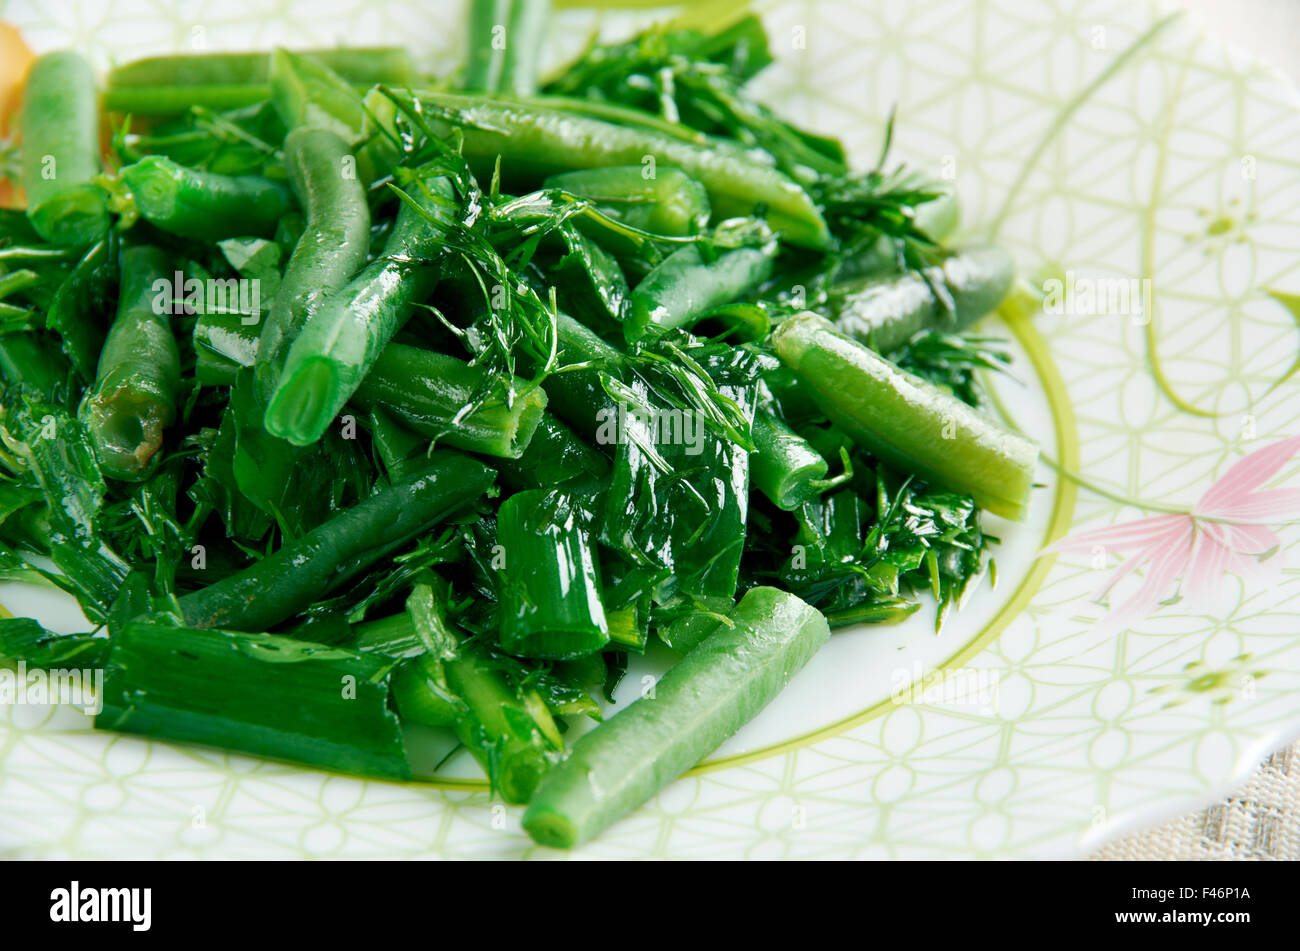 Gremolata - chopped herb condiment classically made of lemon zest, garlic and parsley.Italian cuisine Stock Photo